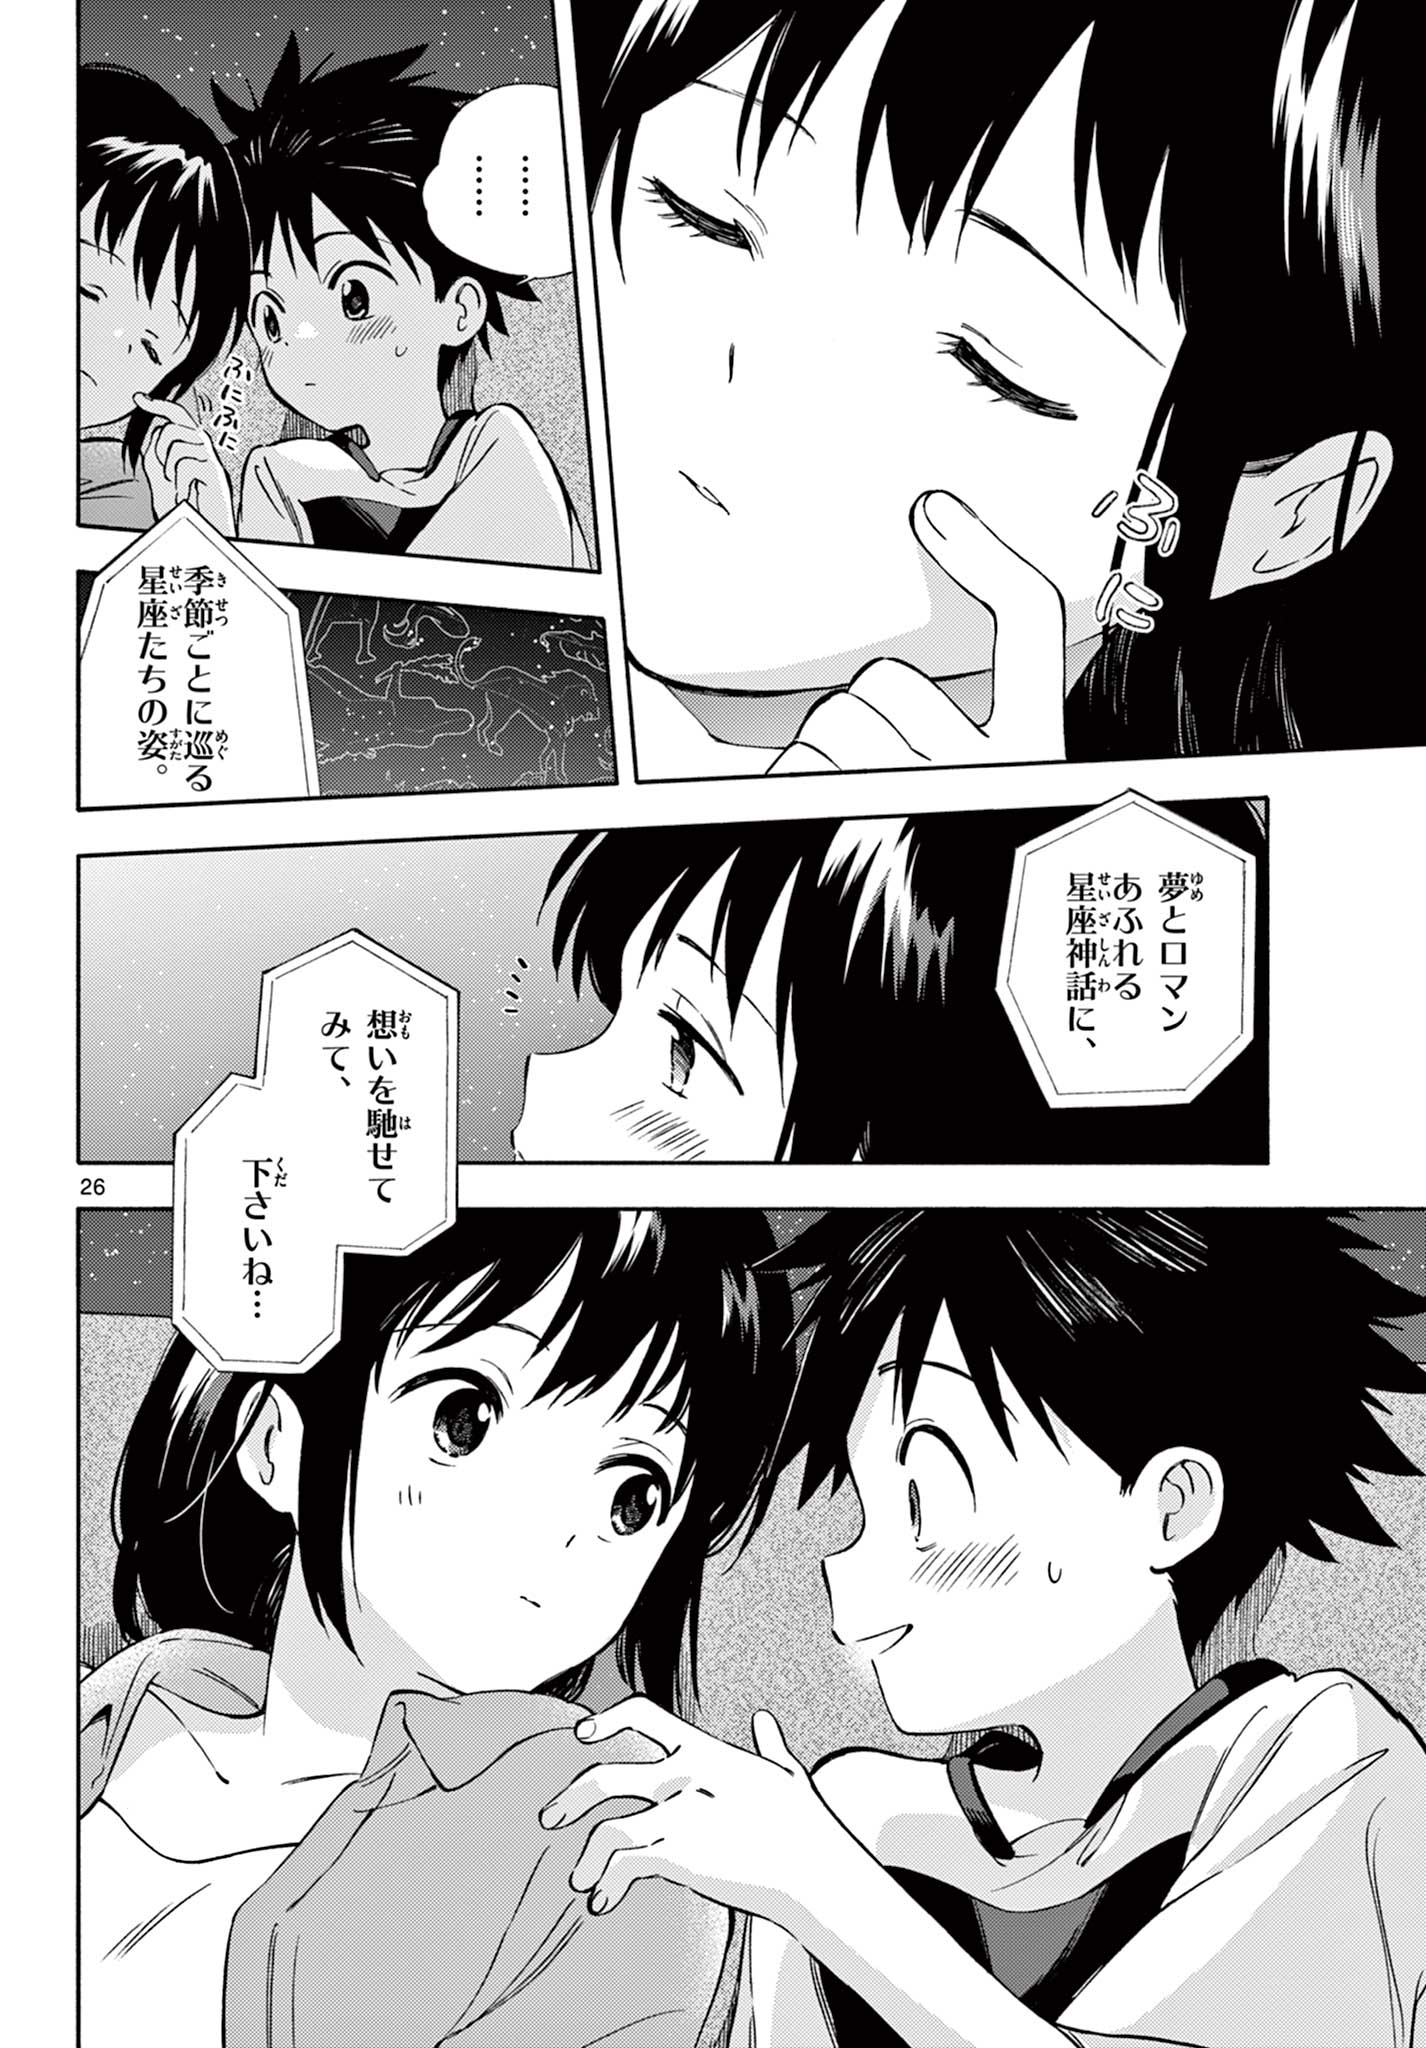 Nami no Shijima no Horizont - Chapter 15.2 - Page 11